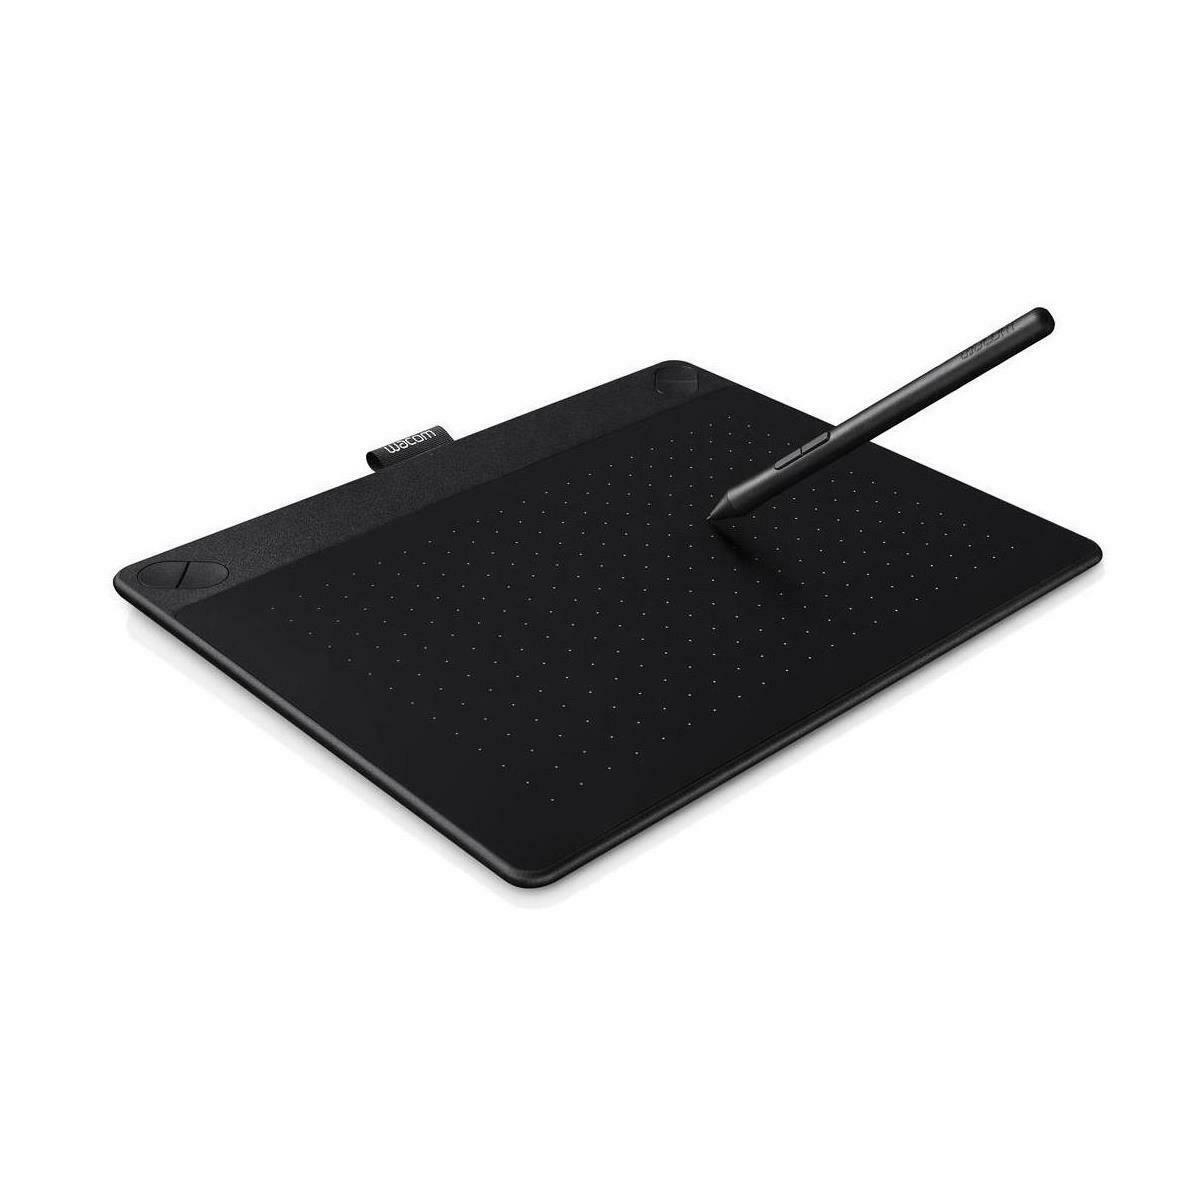 Wacom Intuos Art Pen and Touch Tablet, Medium Black - Refurbished by Wacom